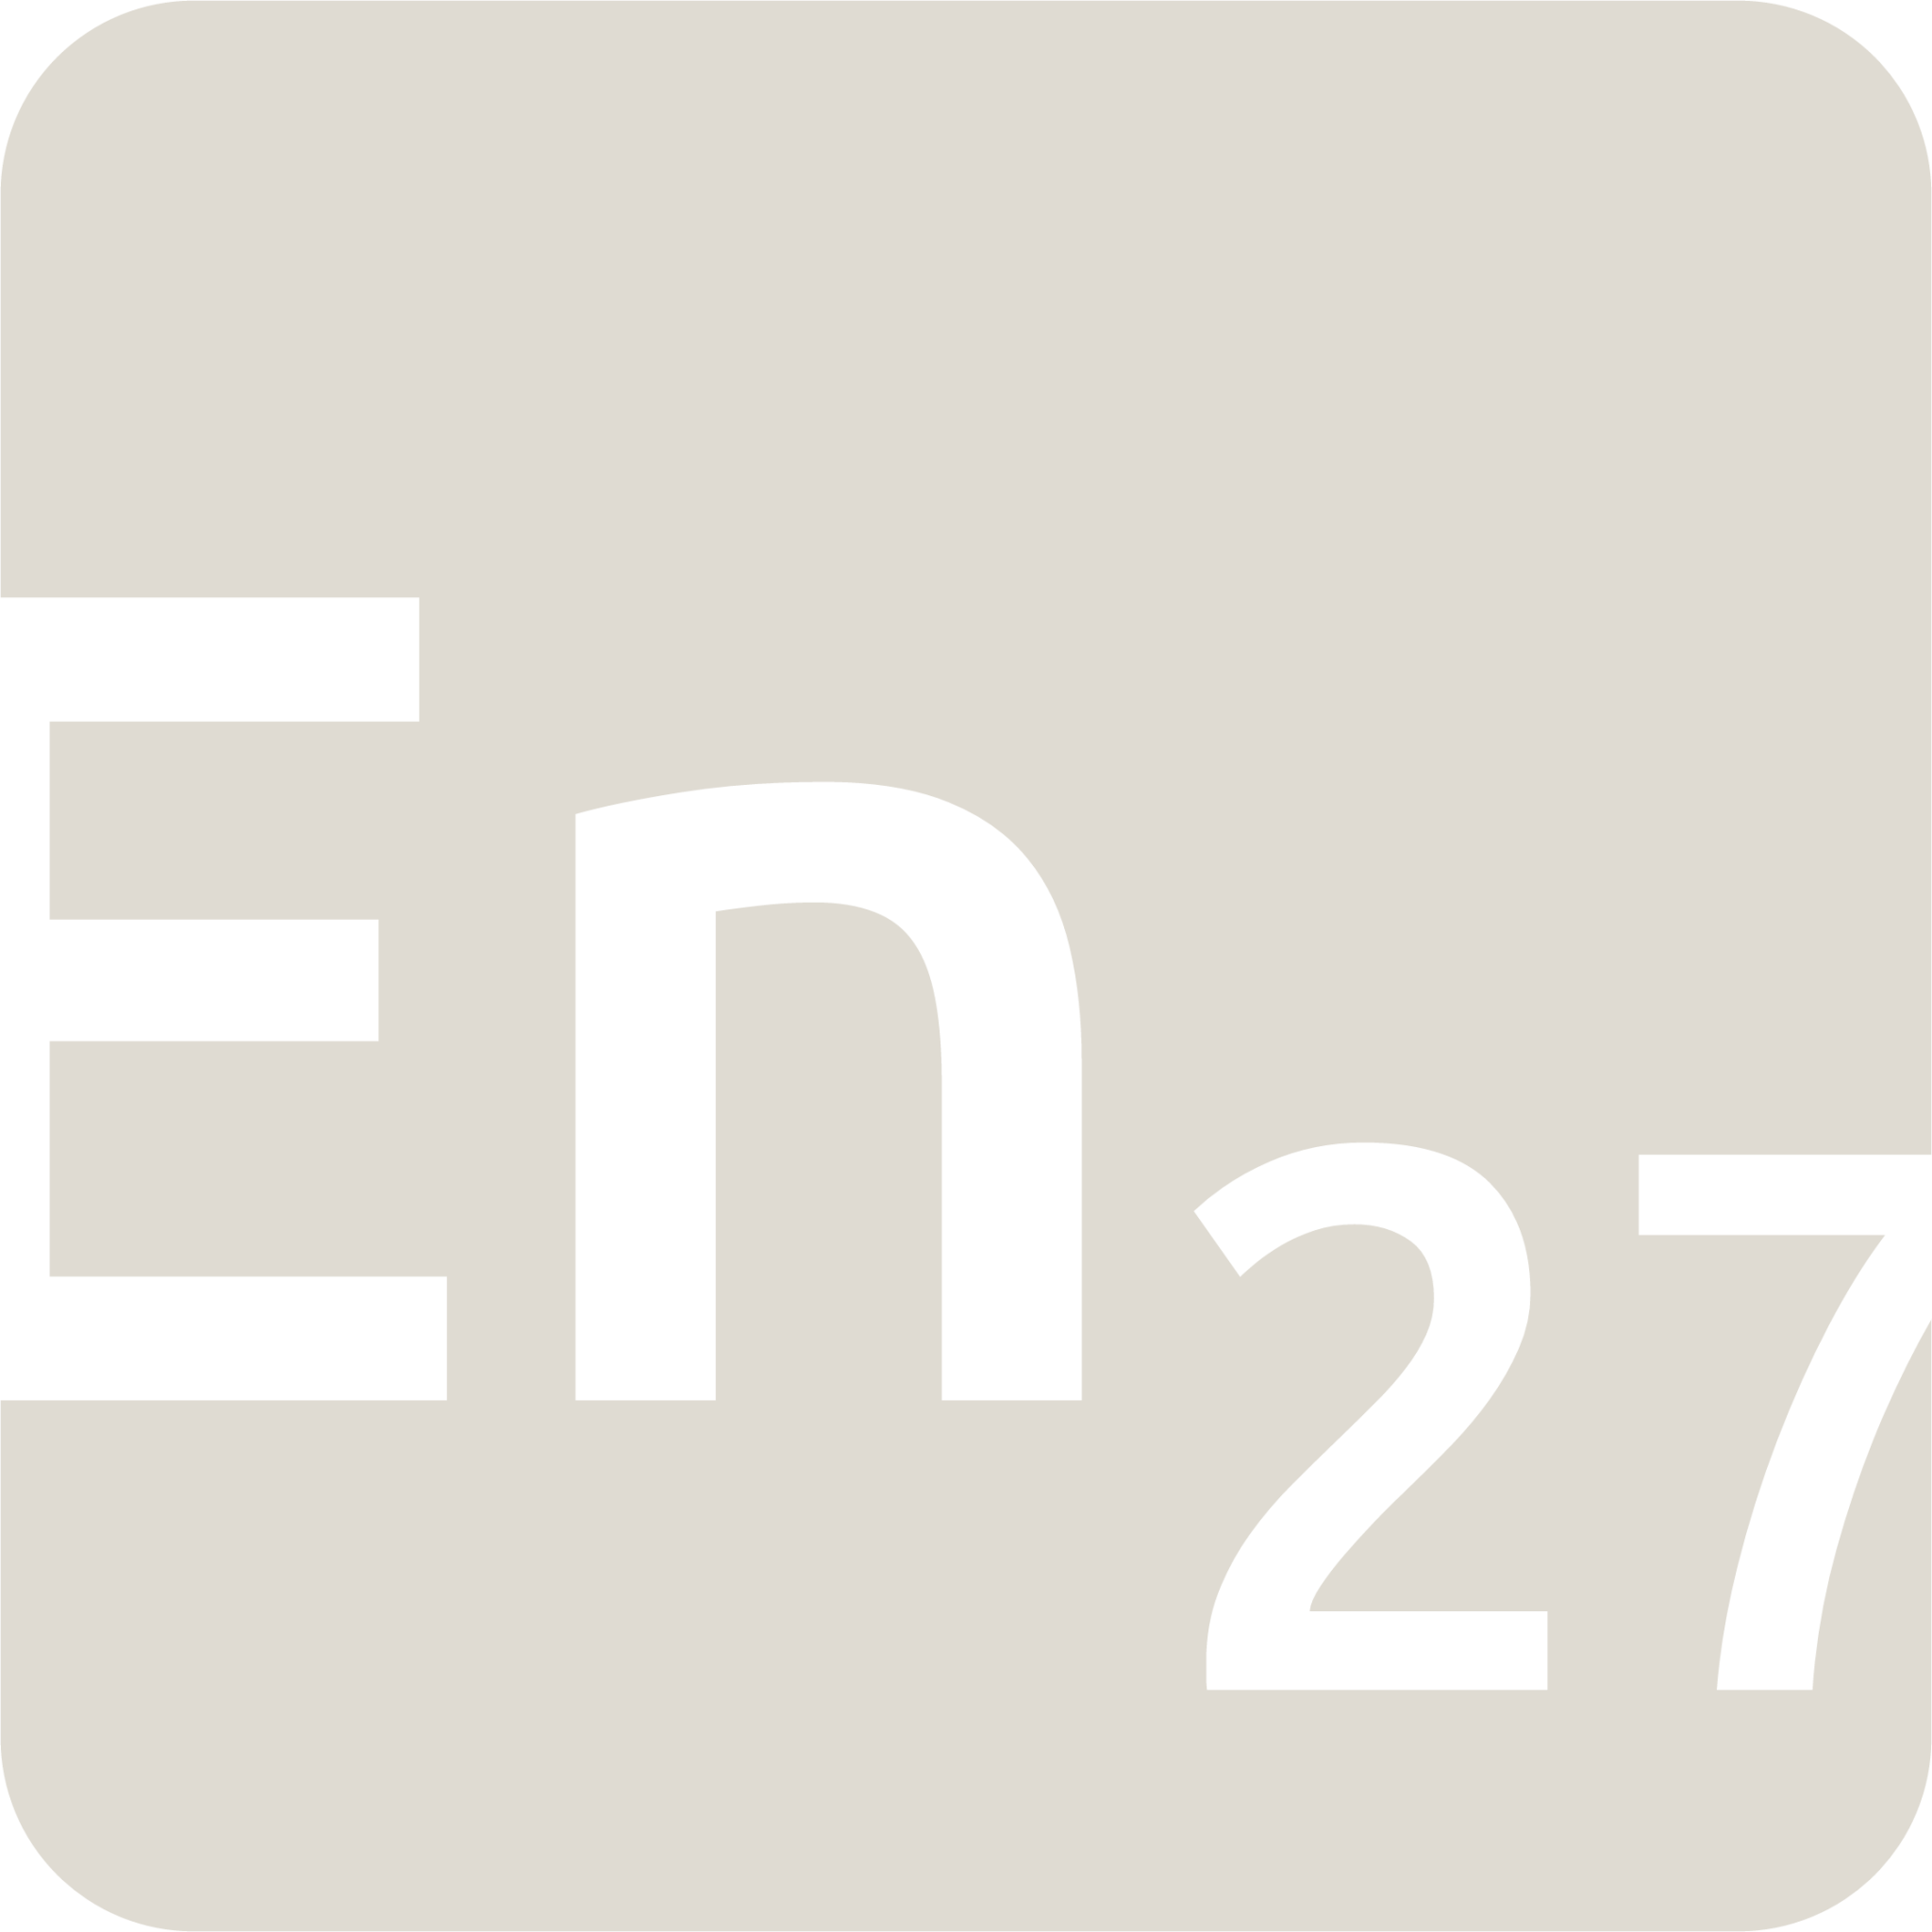 indicator keyboard En 27 icon